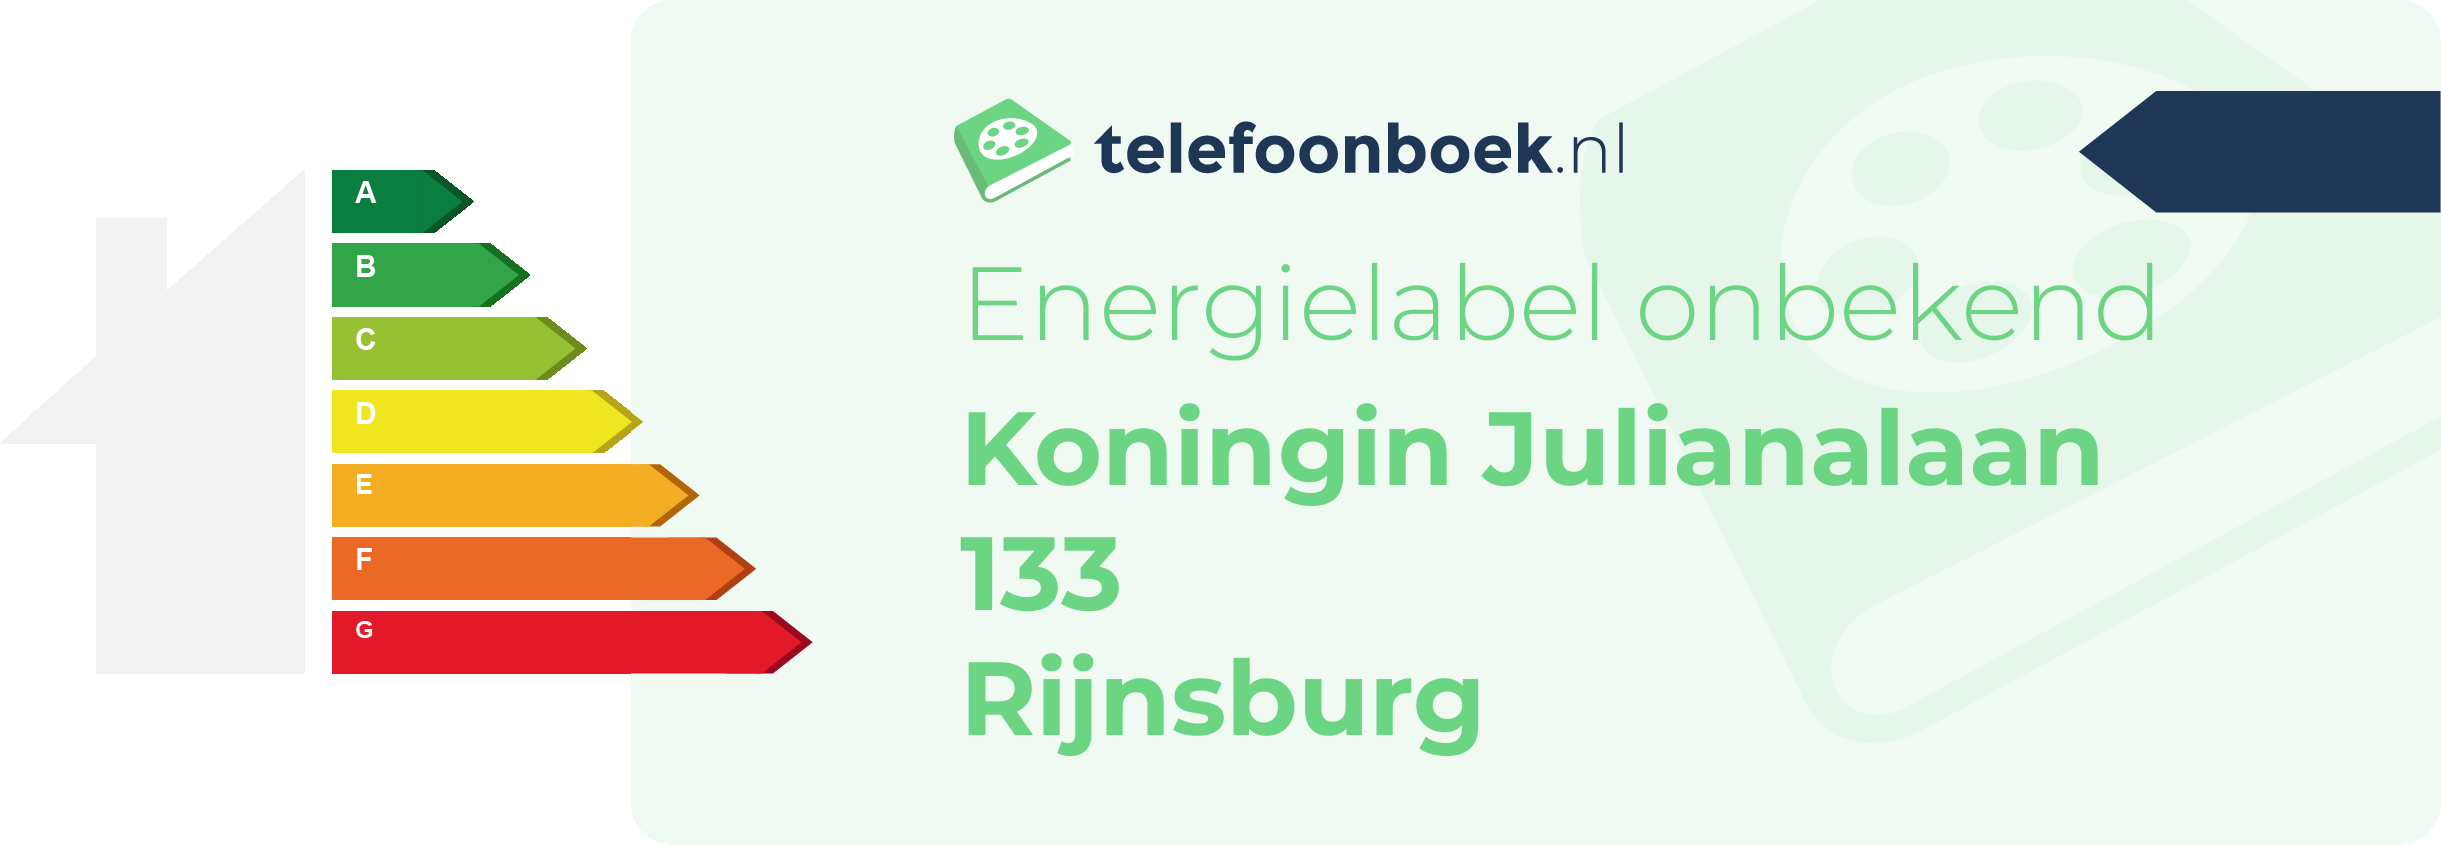 Energielabel Koningin Julianalaan 133 Rijnsburg